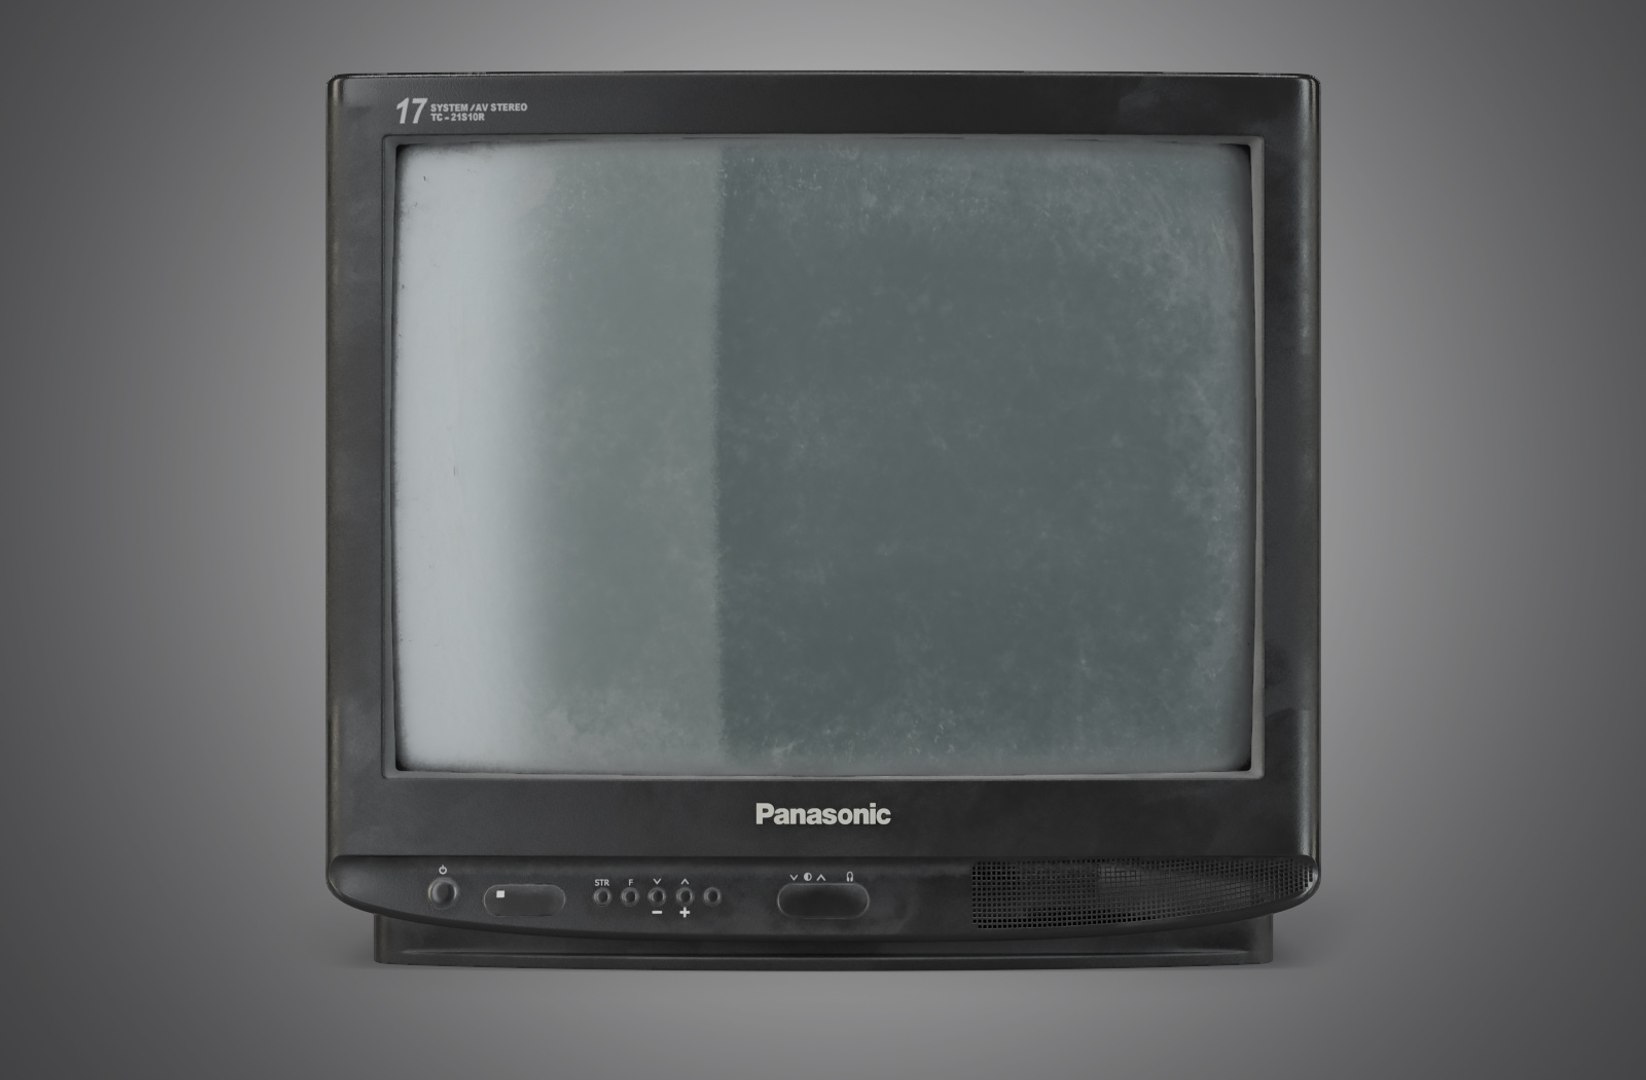 Panasonic - Television